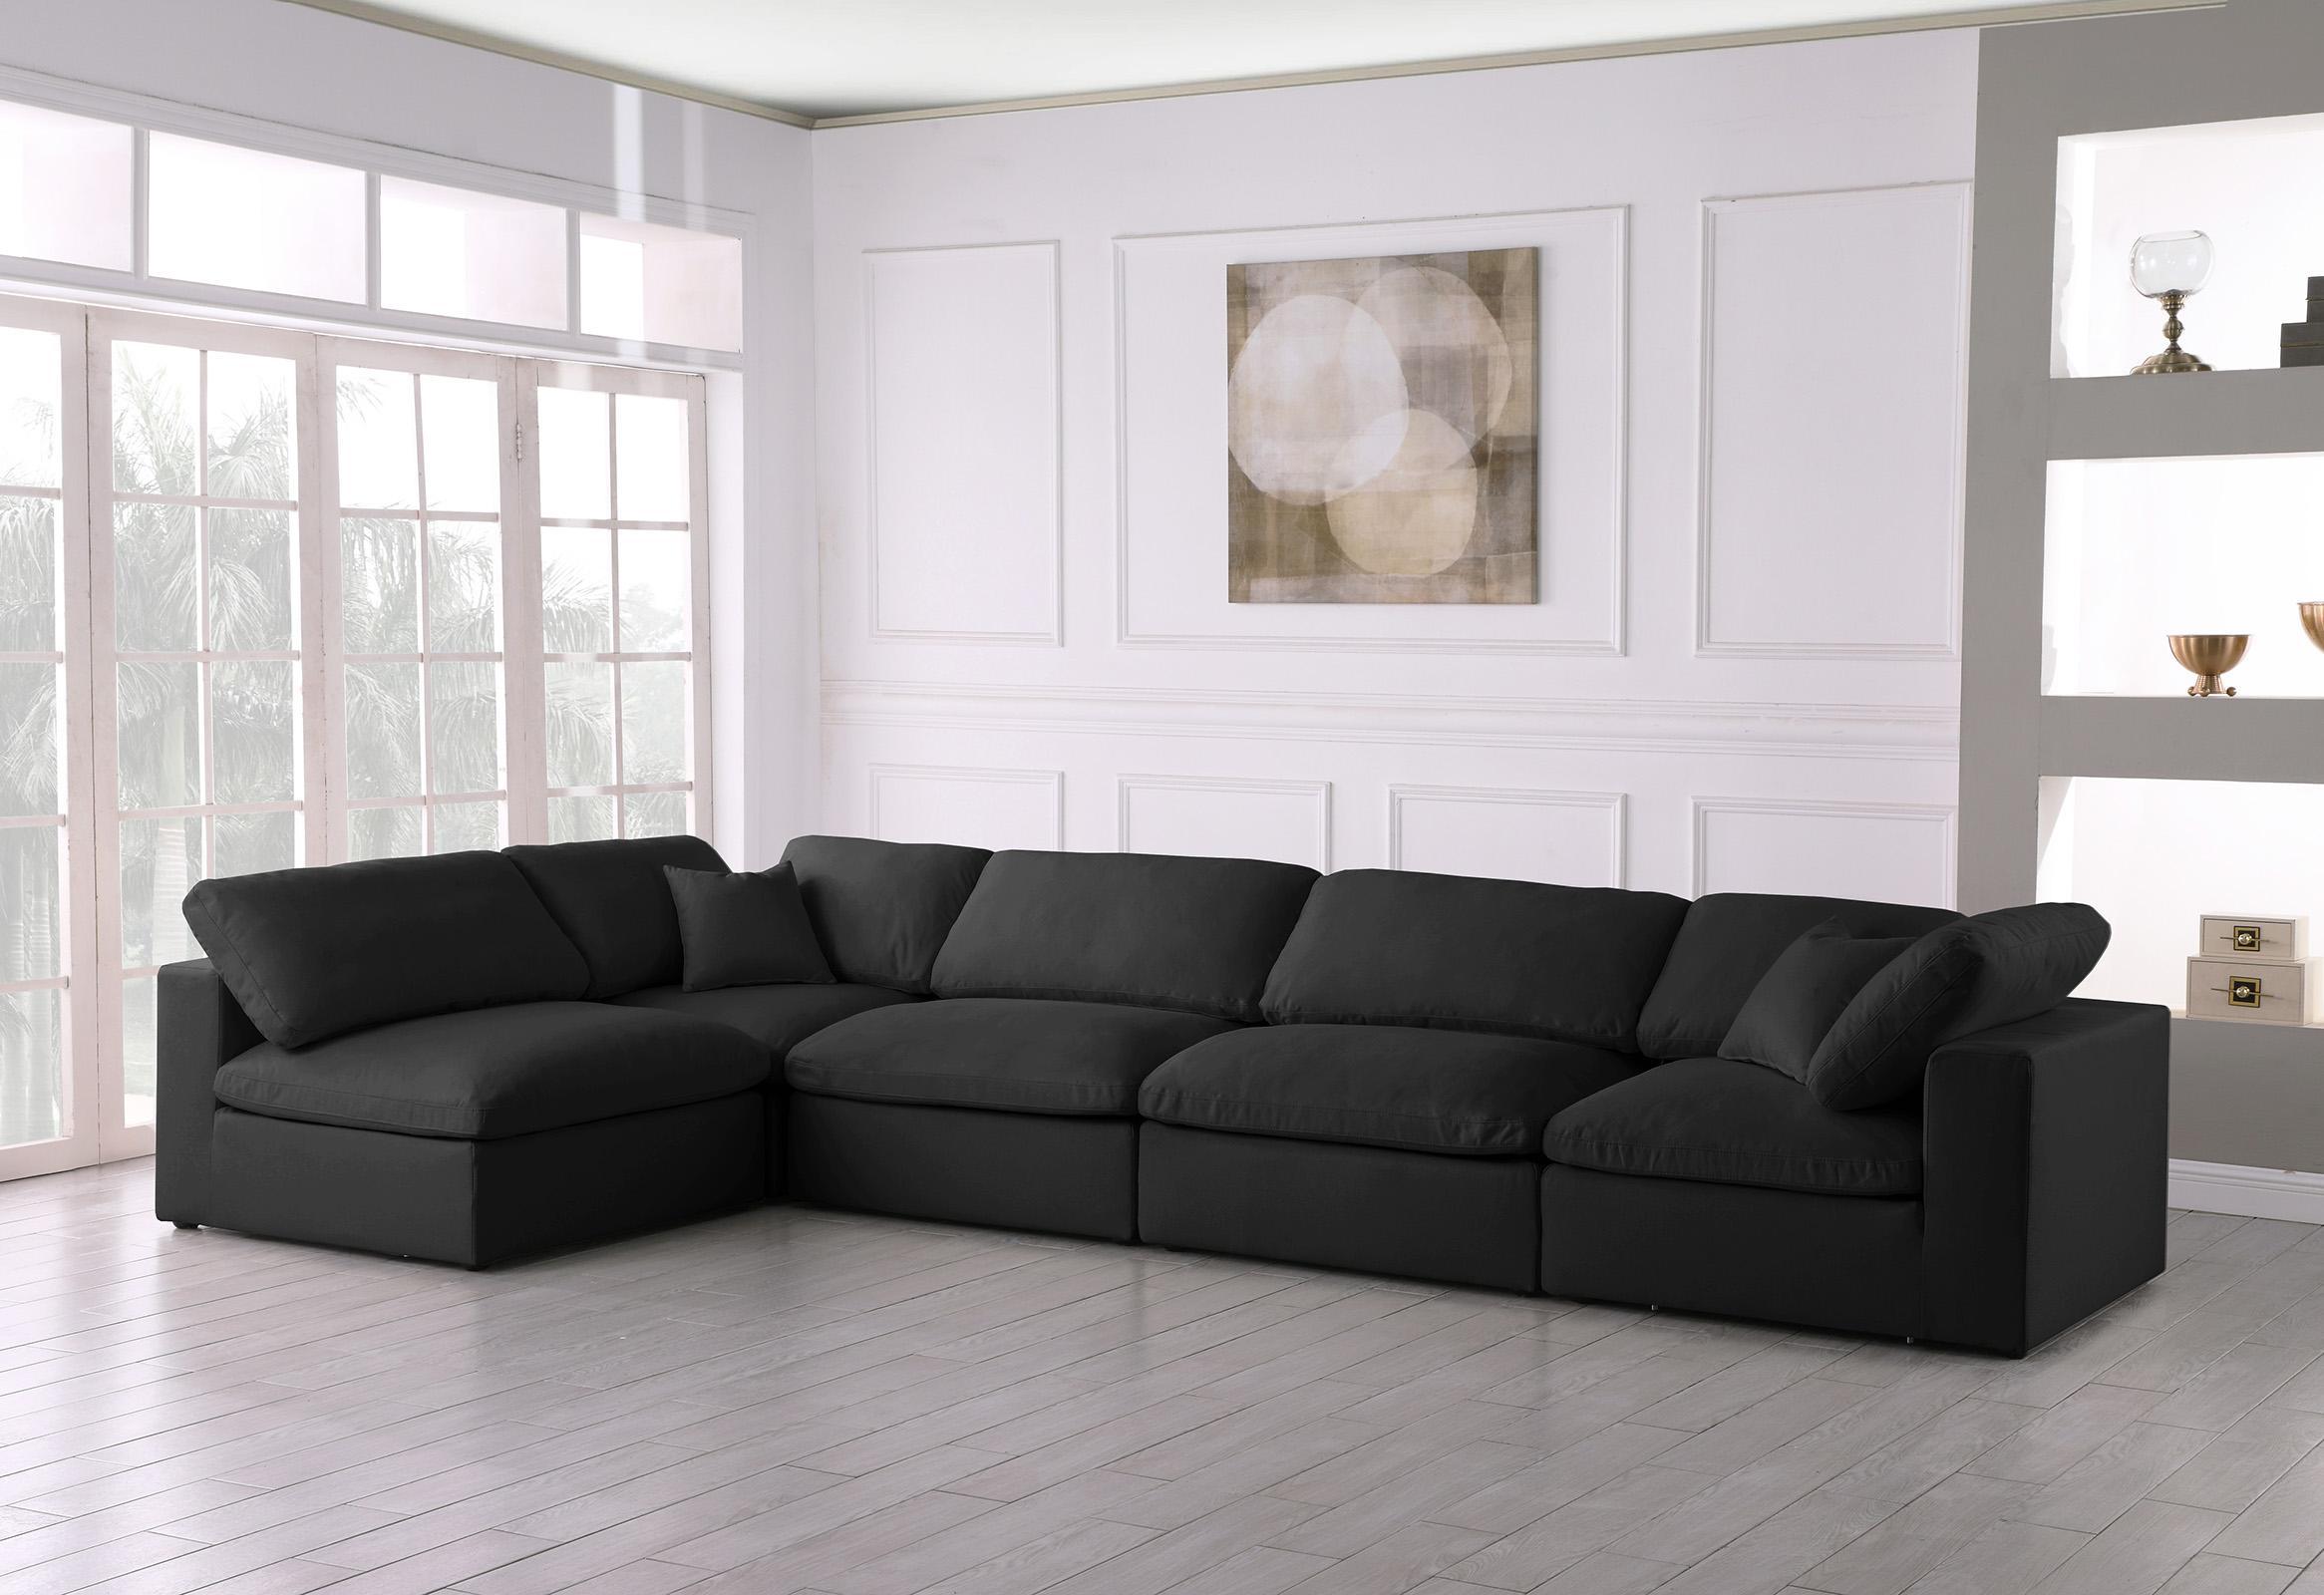 

    
Meridian Furniture 602Black-Sec5D Modular Sectional Sofa Black 602Black-Sec5D
